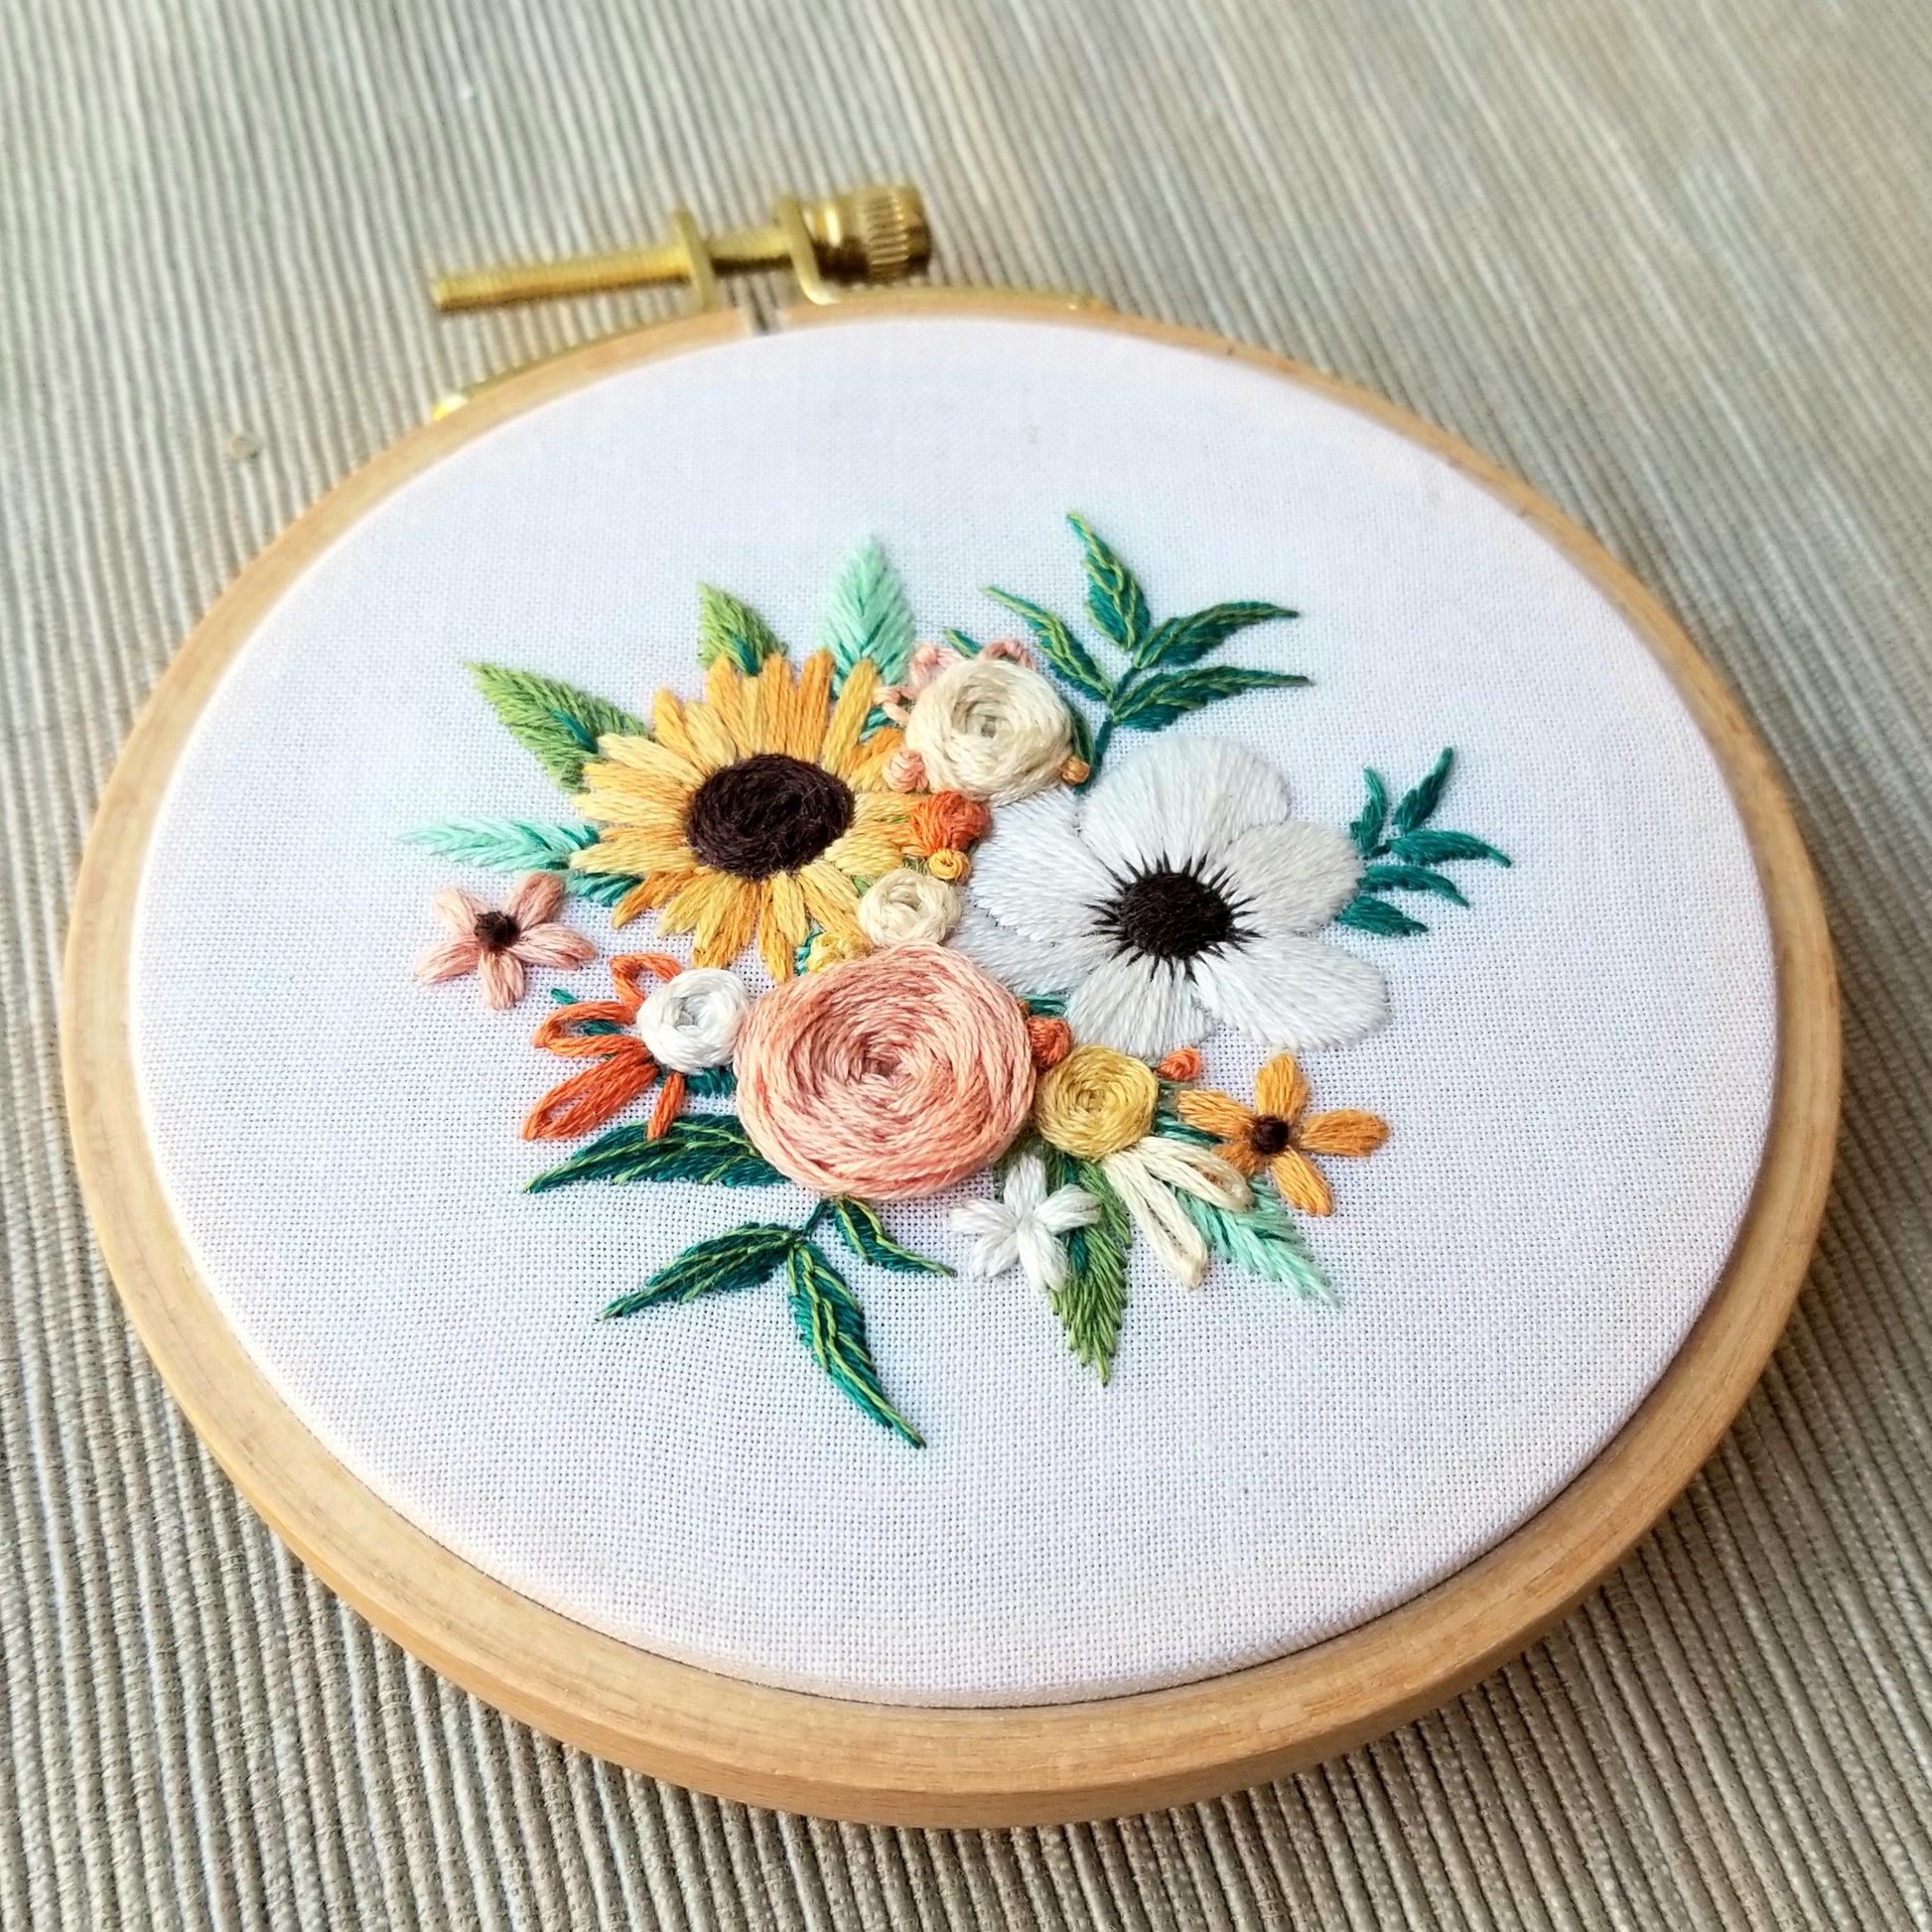 white on orange marigolds botanical embroidery kit — My Giant Strawberry:  Creative Joy, Watercolor Art and Garden Magic